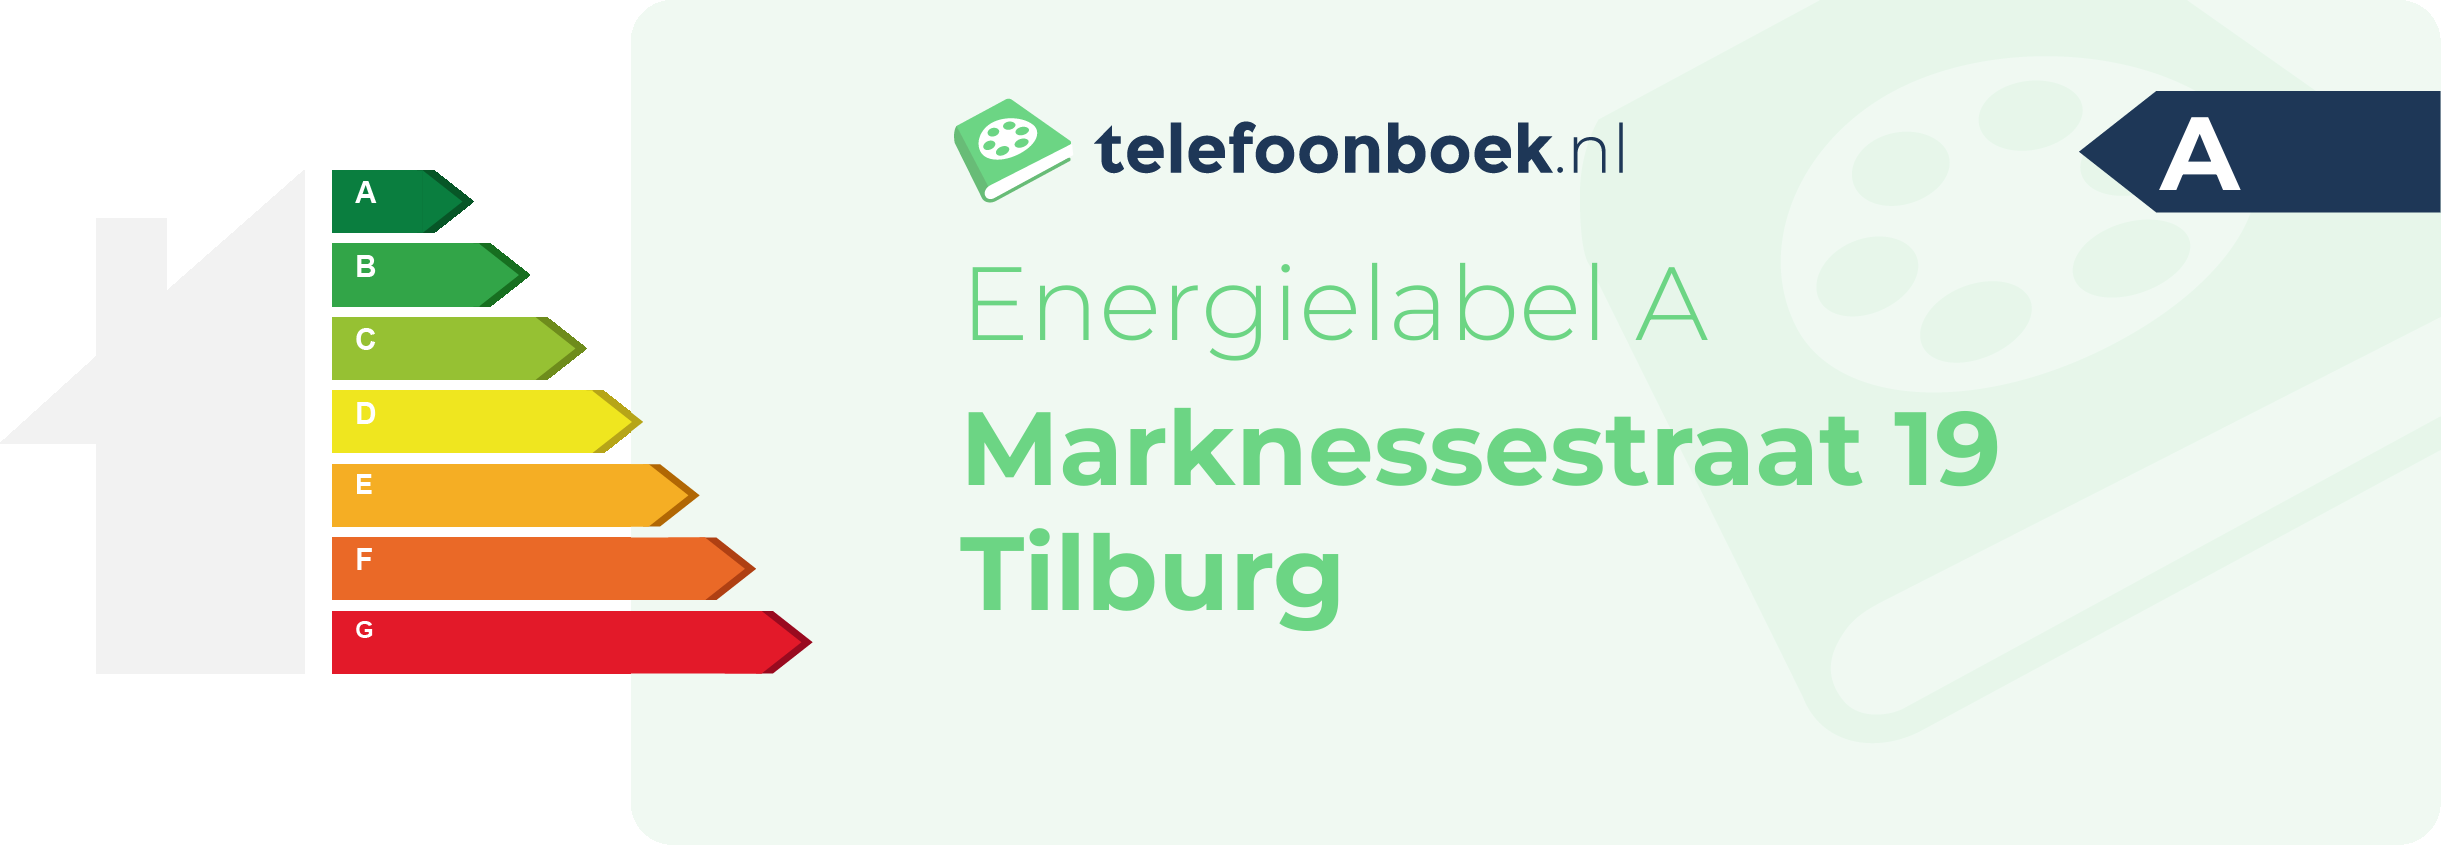 Energielabel Marknessestraat 19 Tilburg